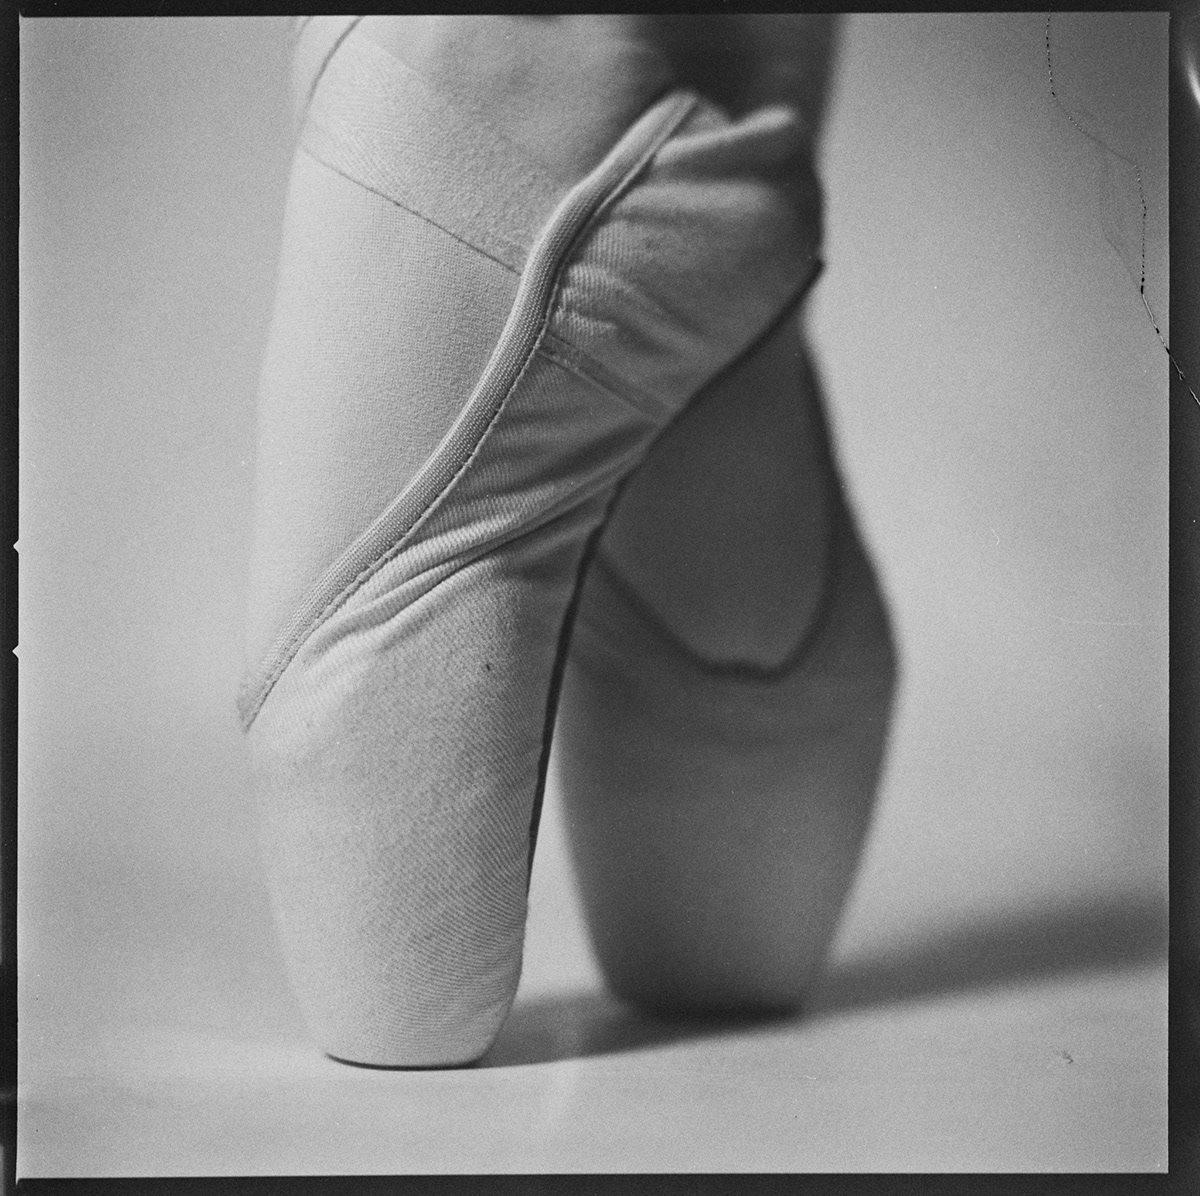 analog analog photography ballet ballerina Fashion  Photography  portrait DANCE   bnw blackandwhite